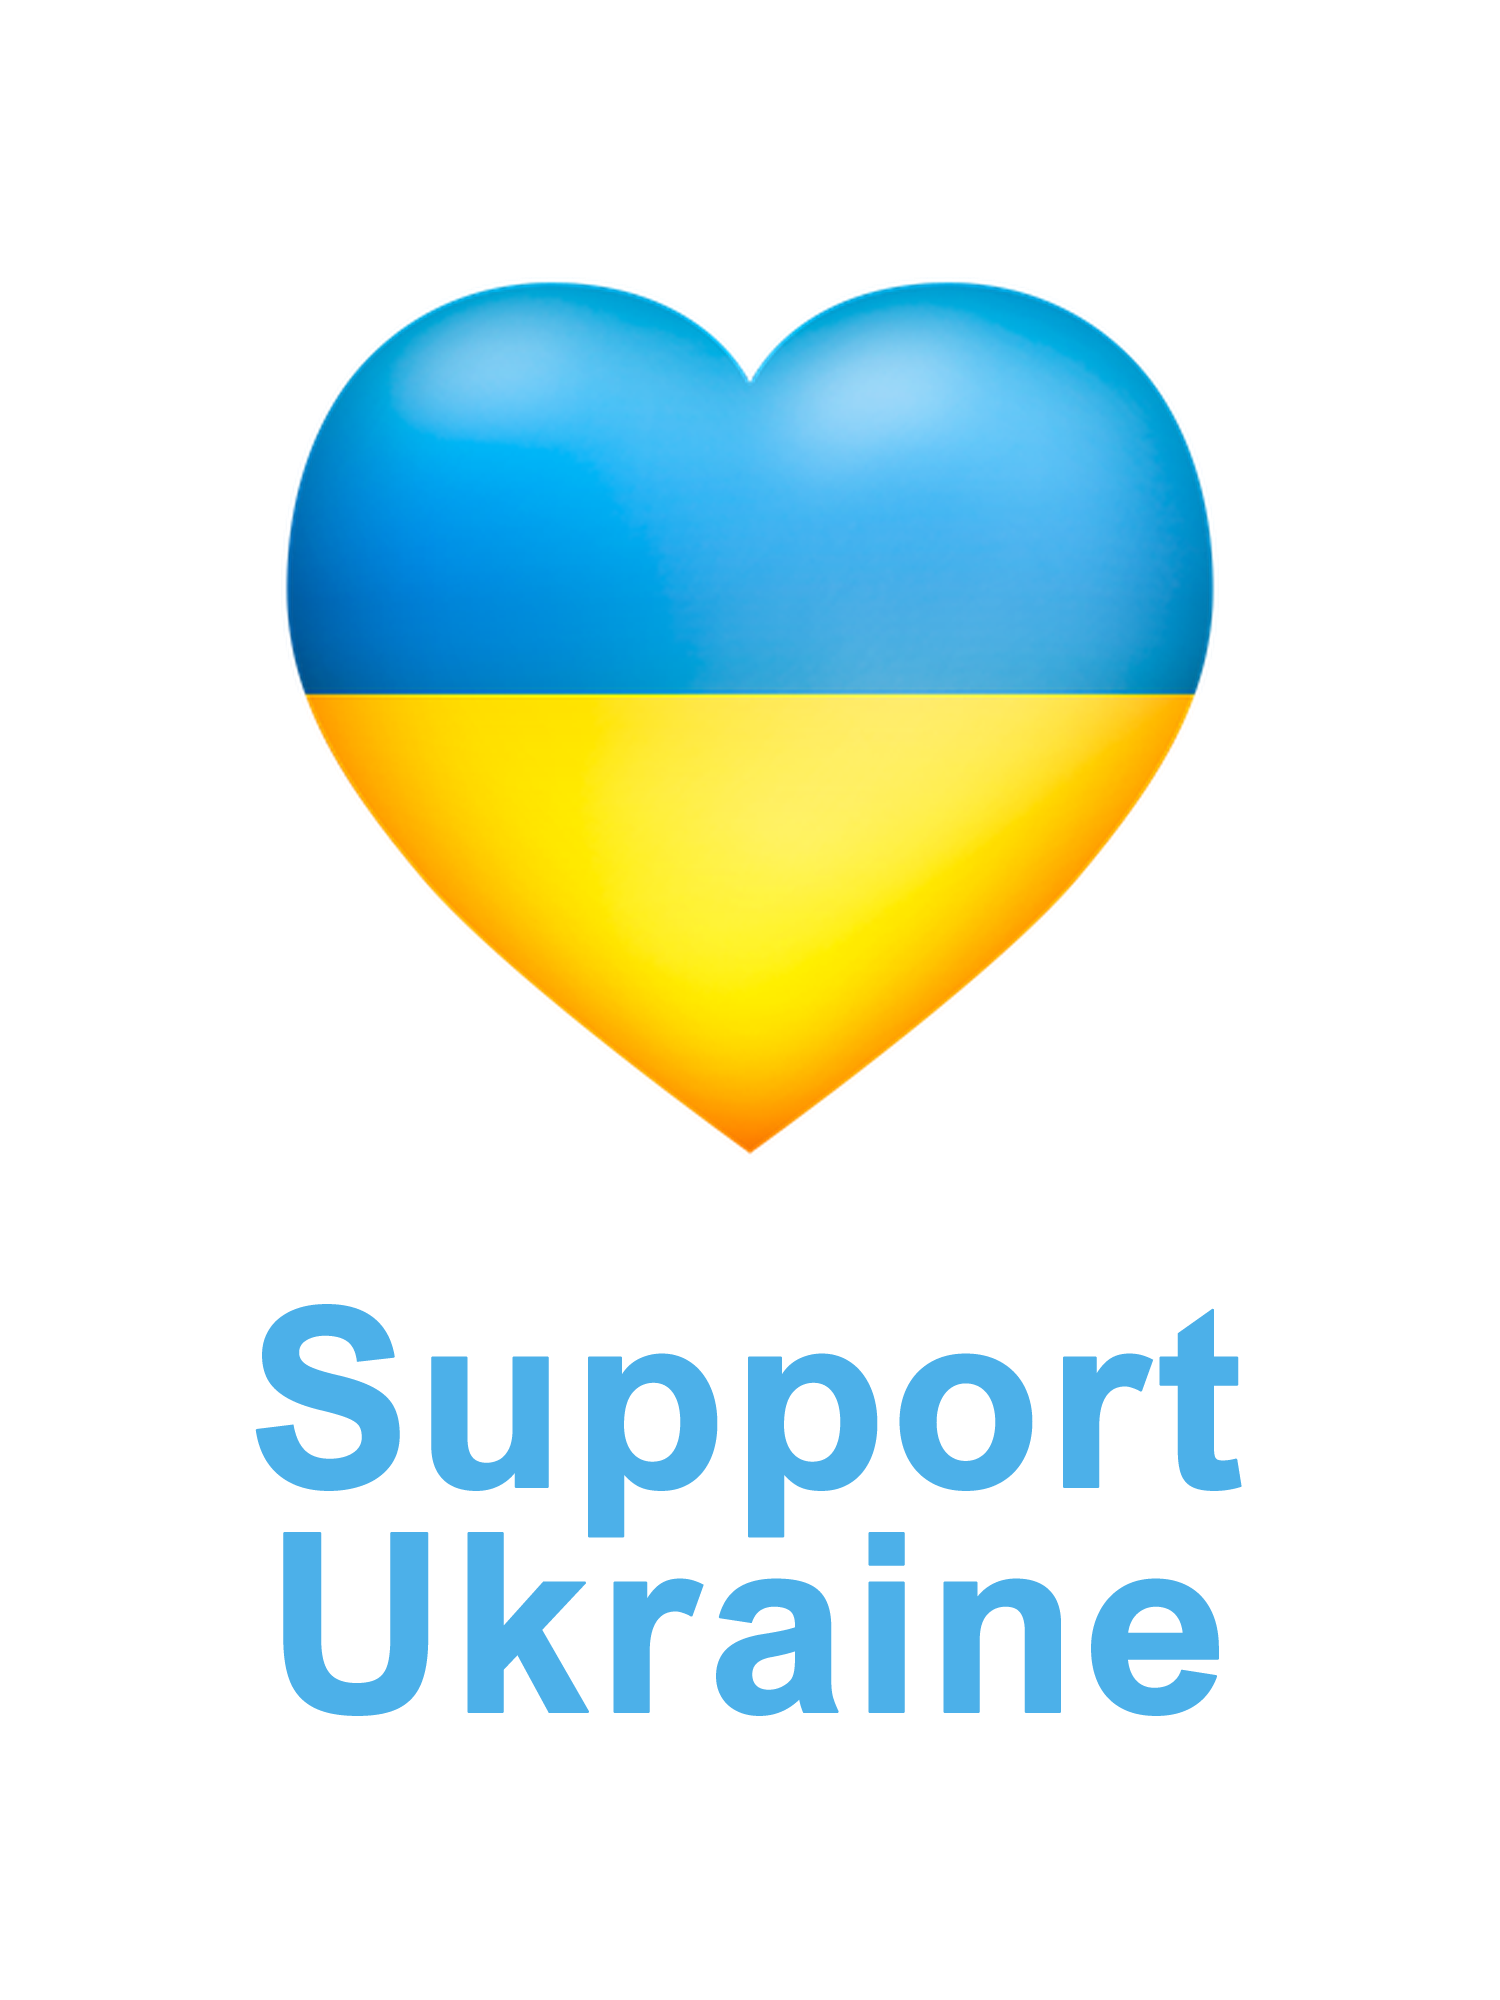 Support Ukraine PNG